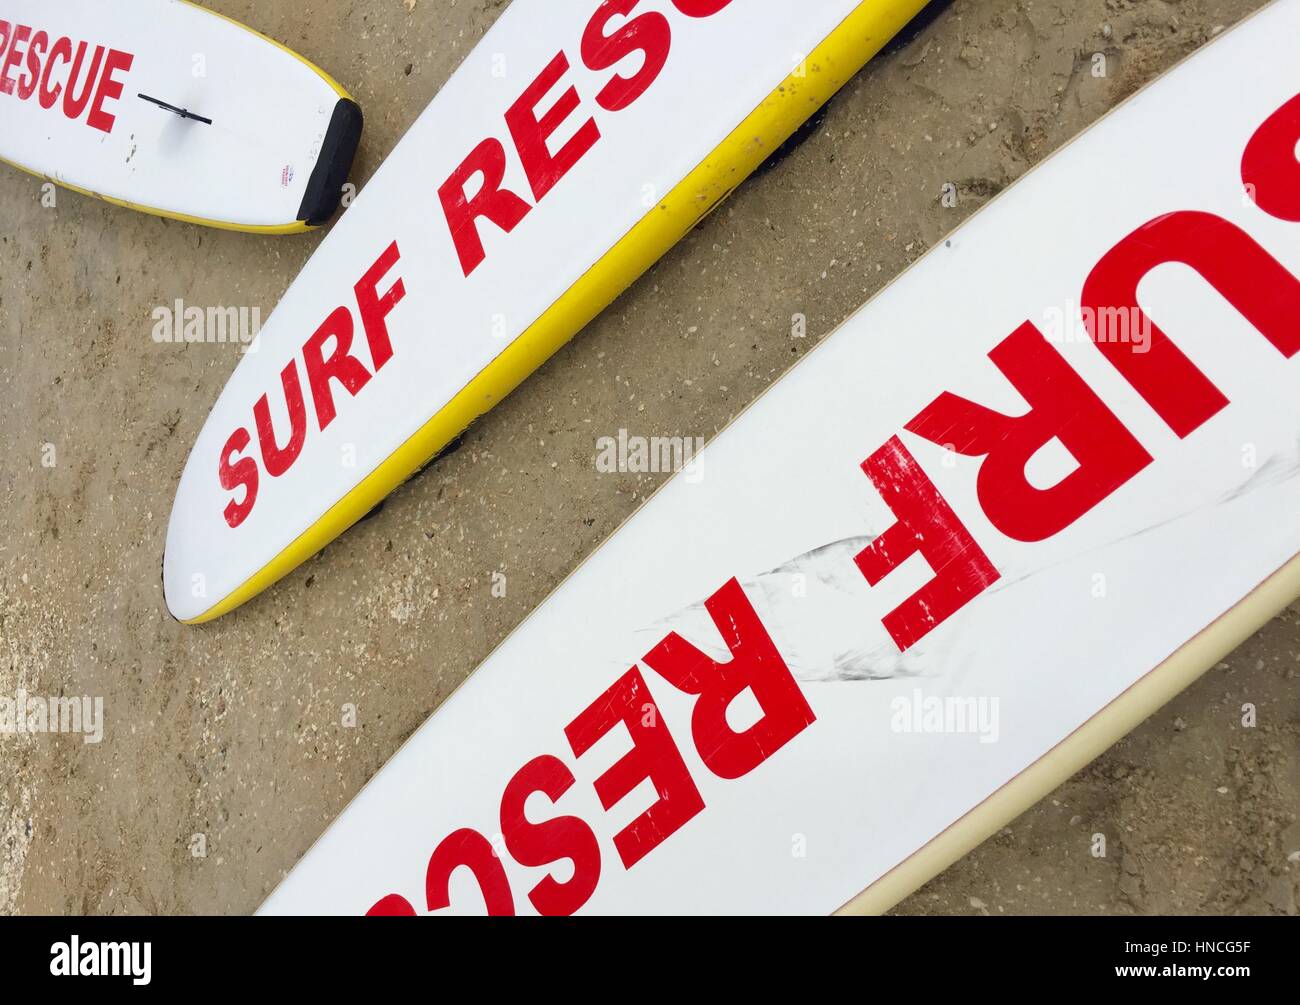 Australian beach lifesaver surfboards on the sand Stock Photo